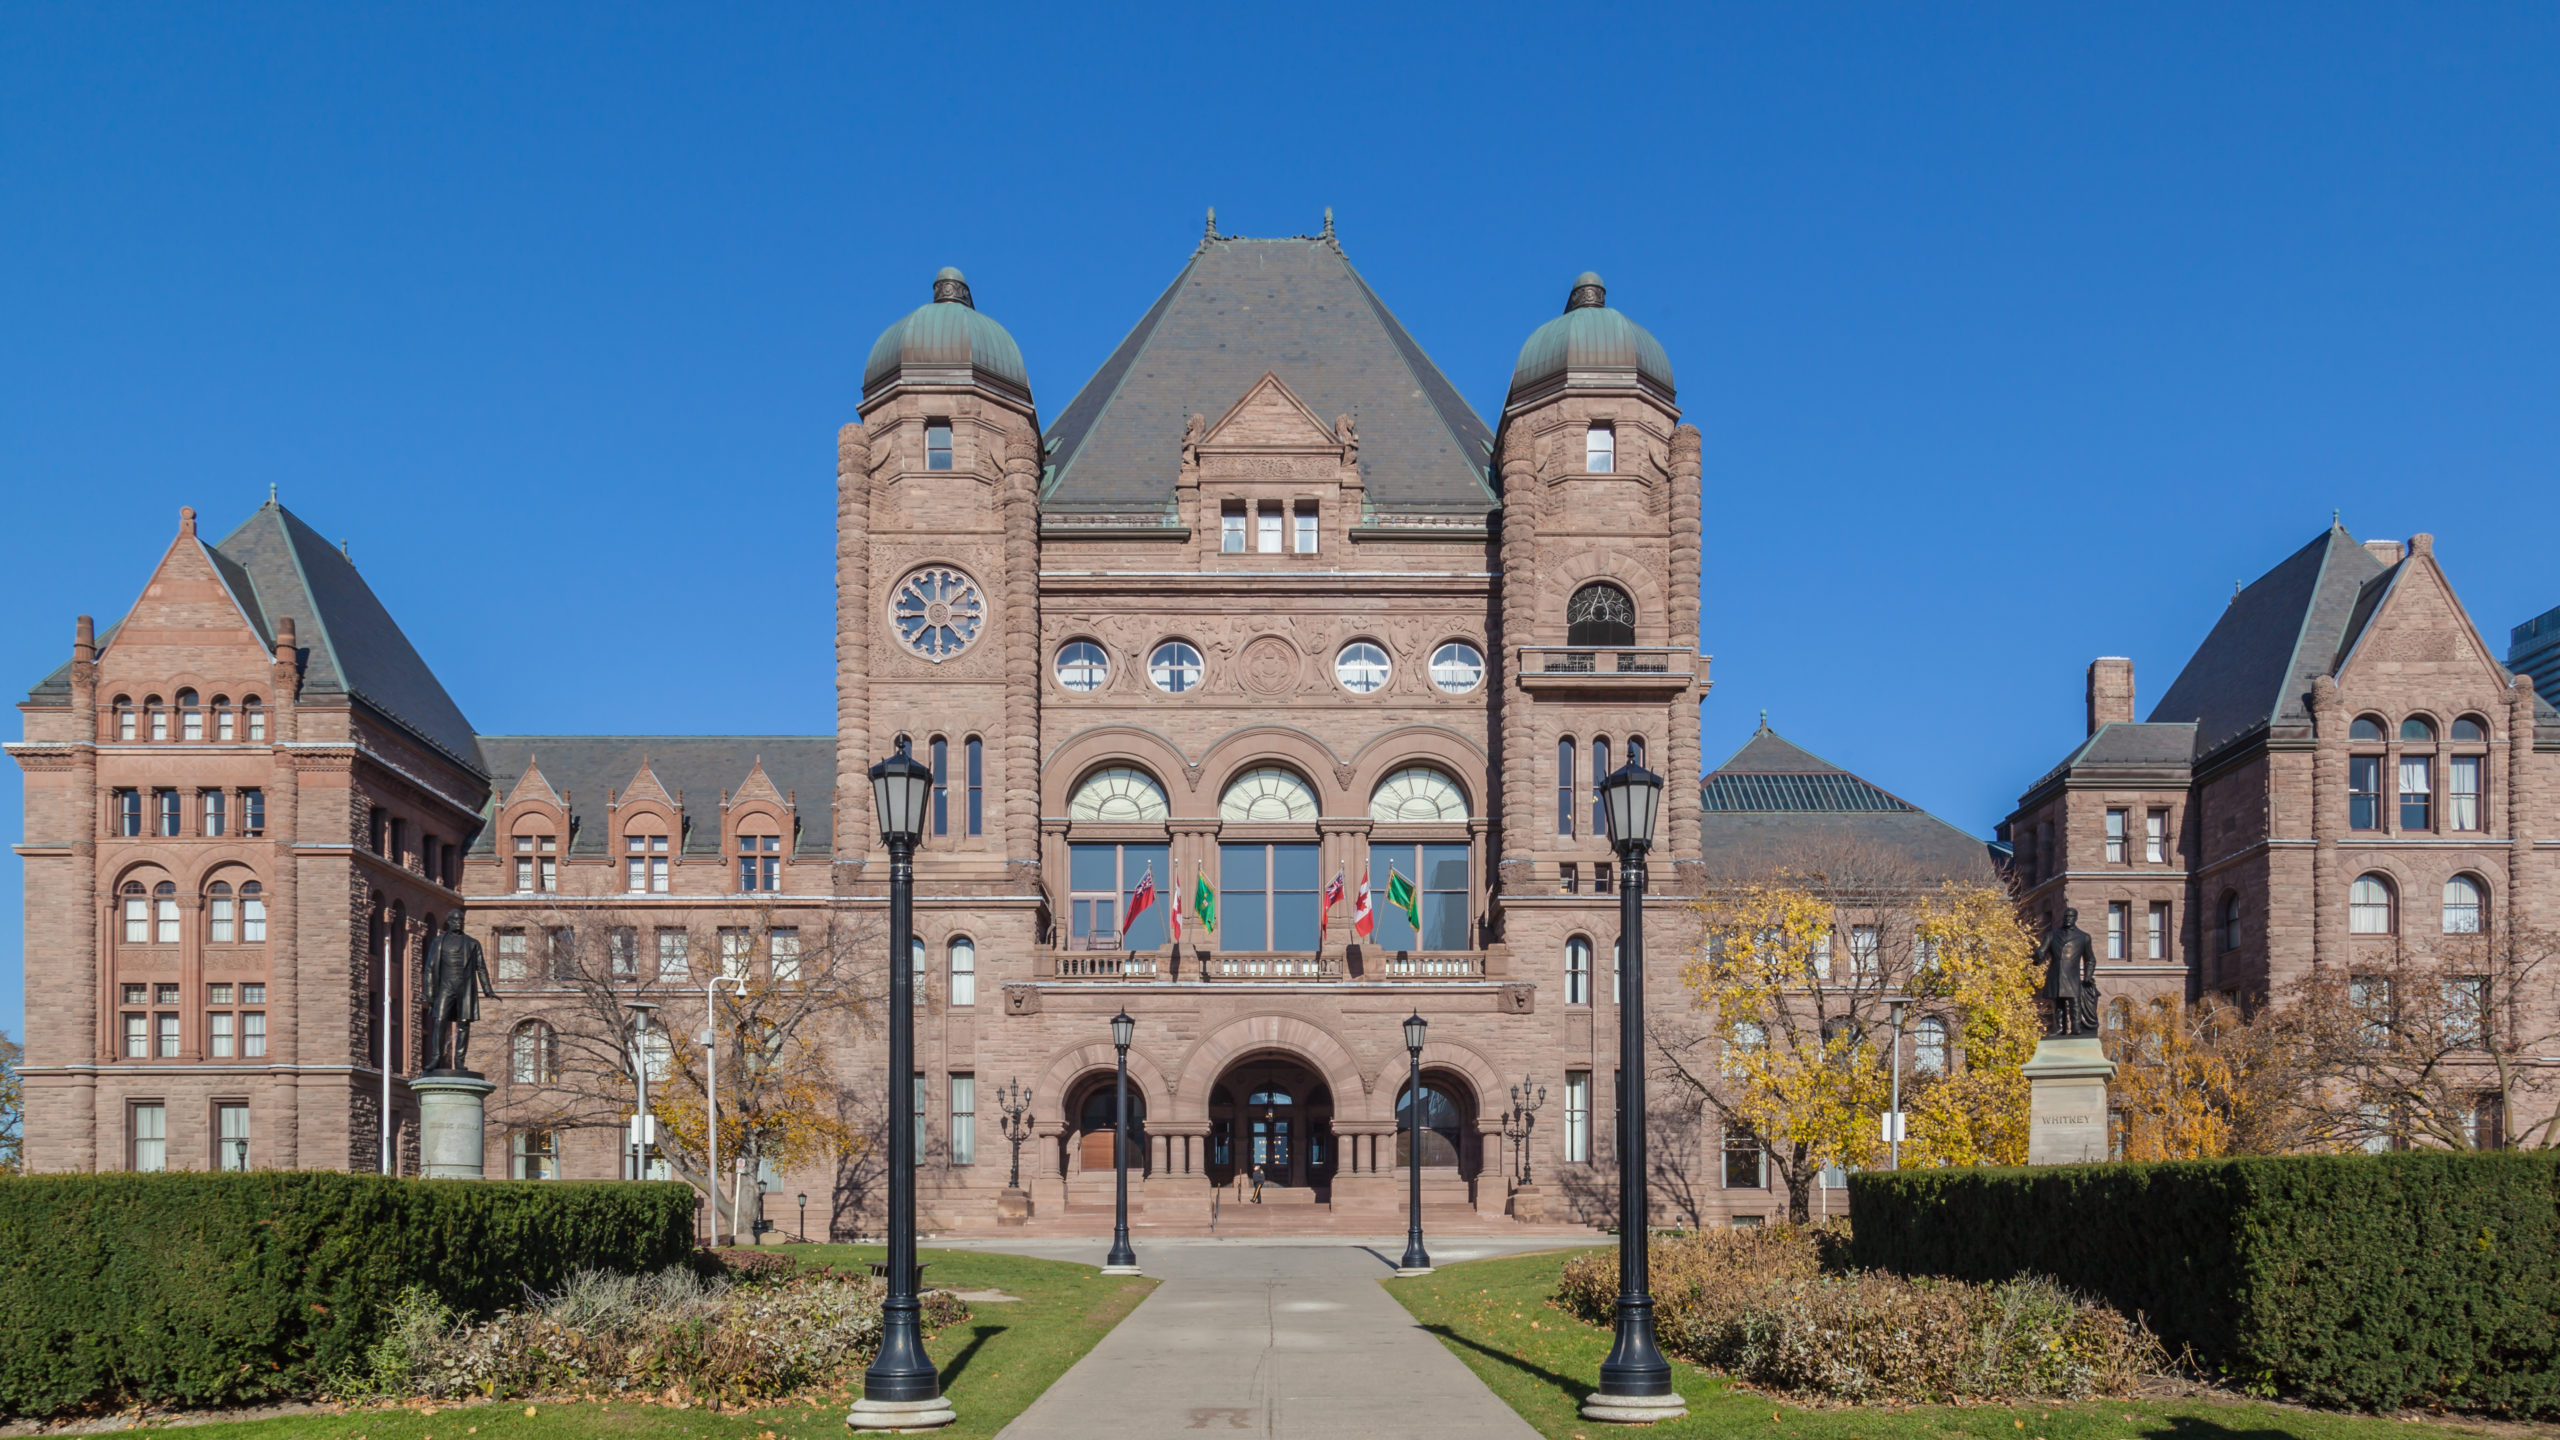 Stock photo of the Ontario parliament buildings - Ontario Legislative Building at Queen's Park, Toronto, Canada